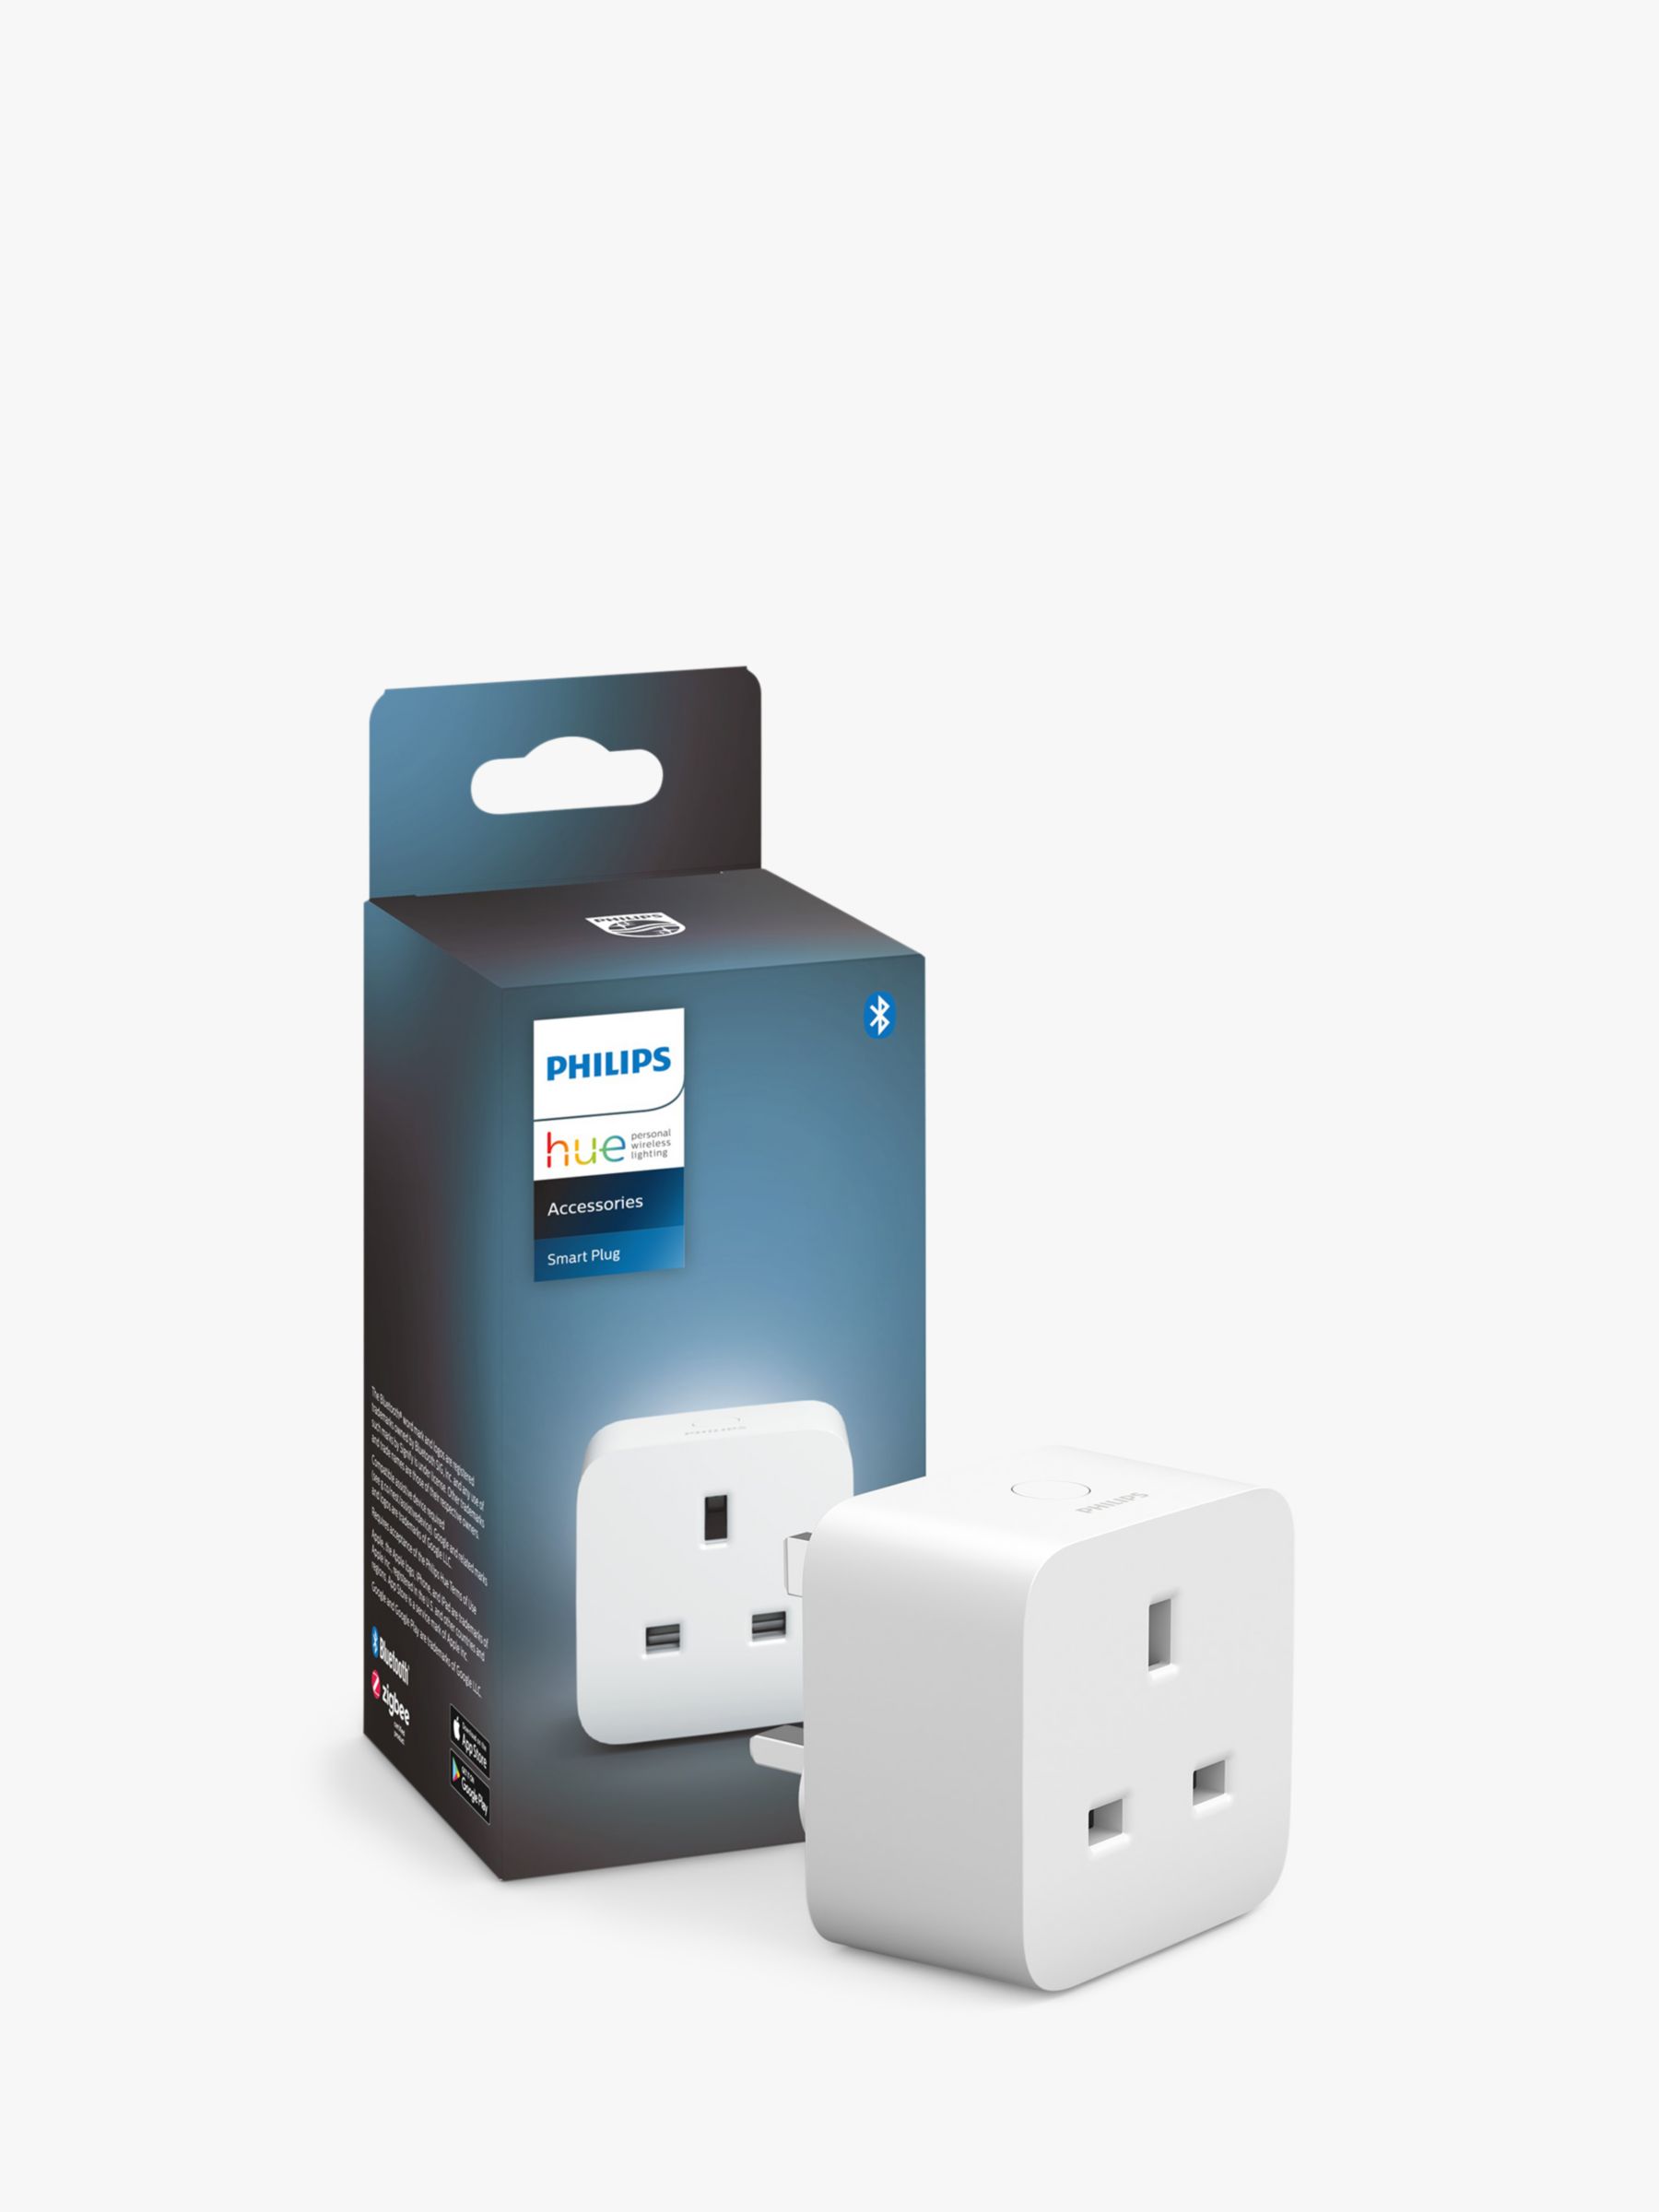 Photo of Philips hue smart plug